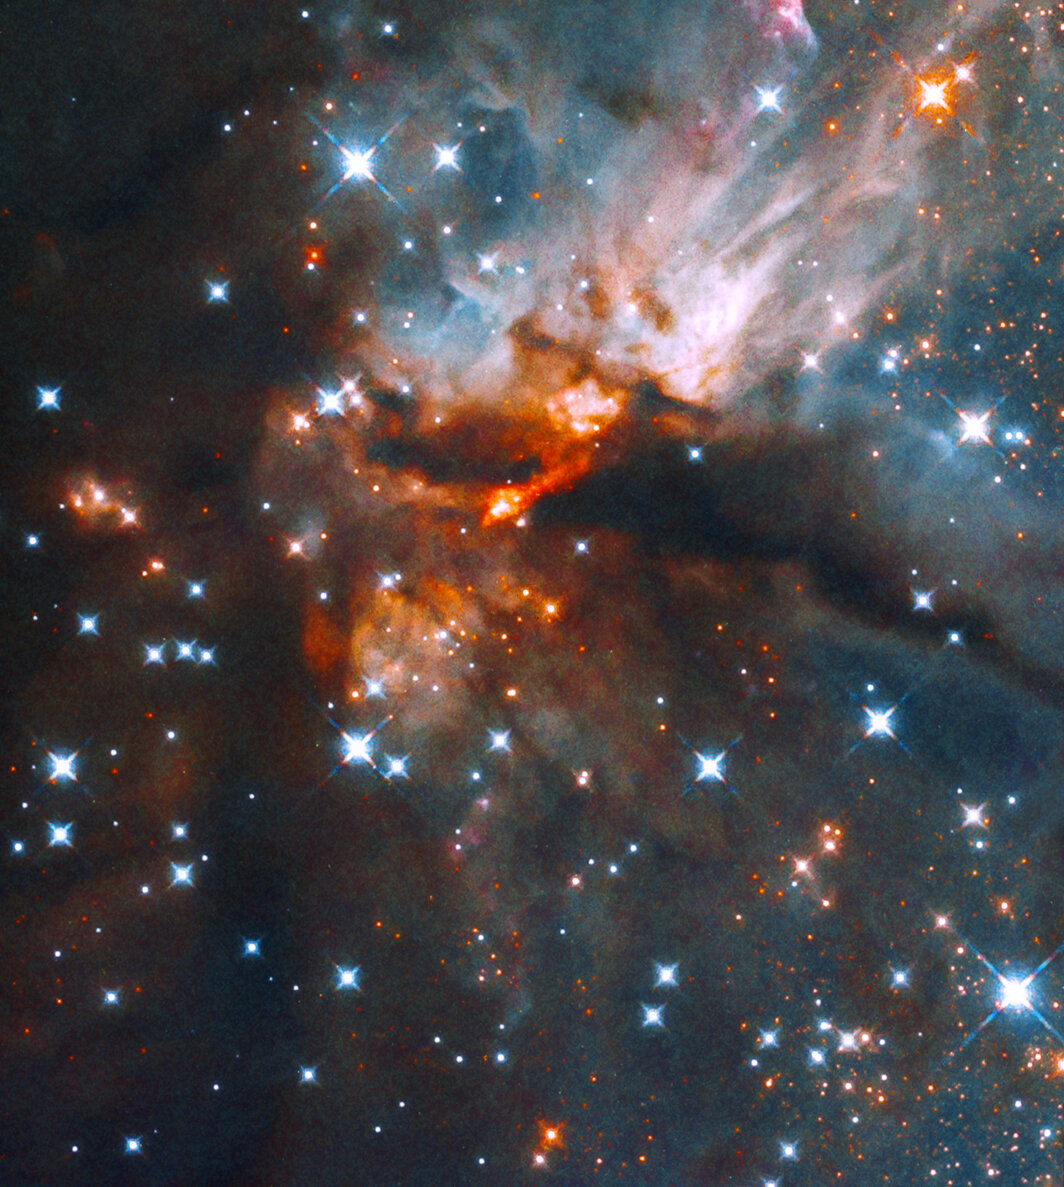 protostar images hubble